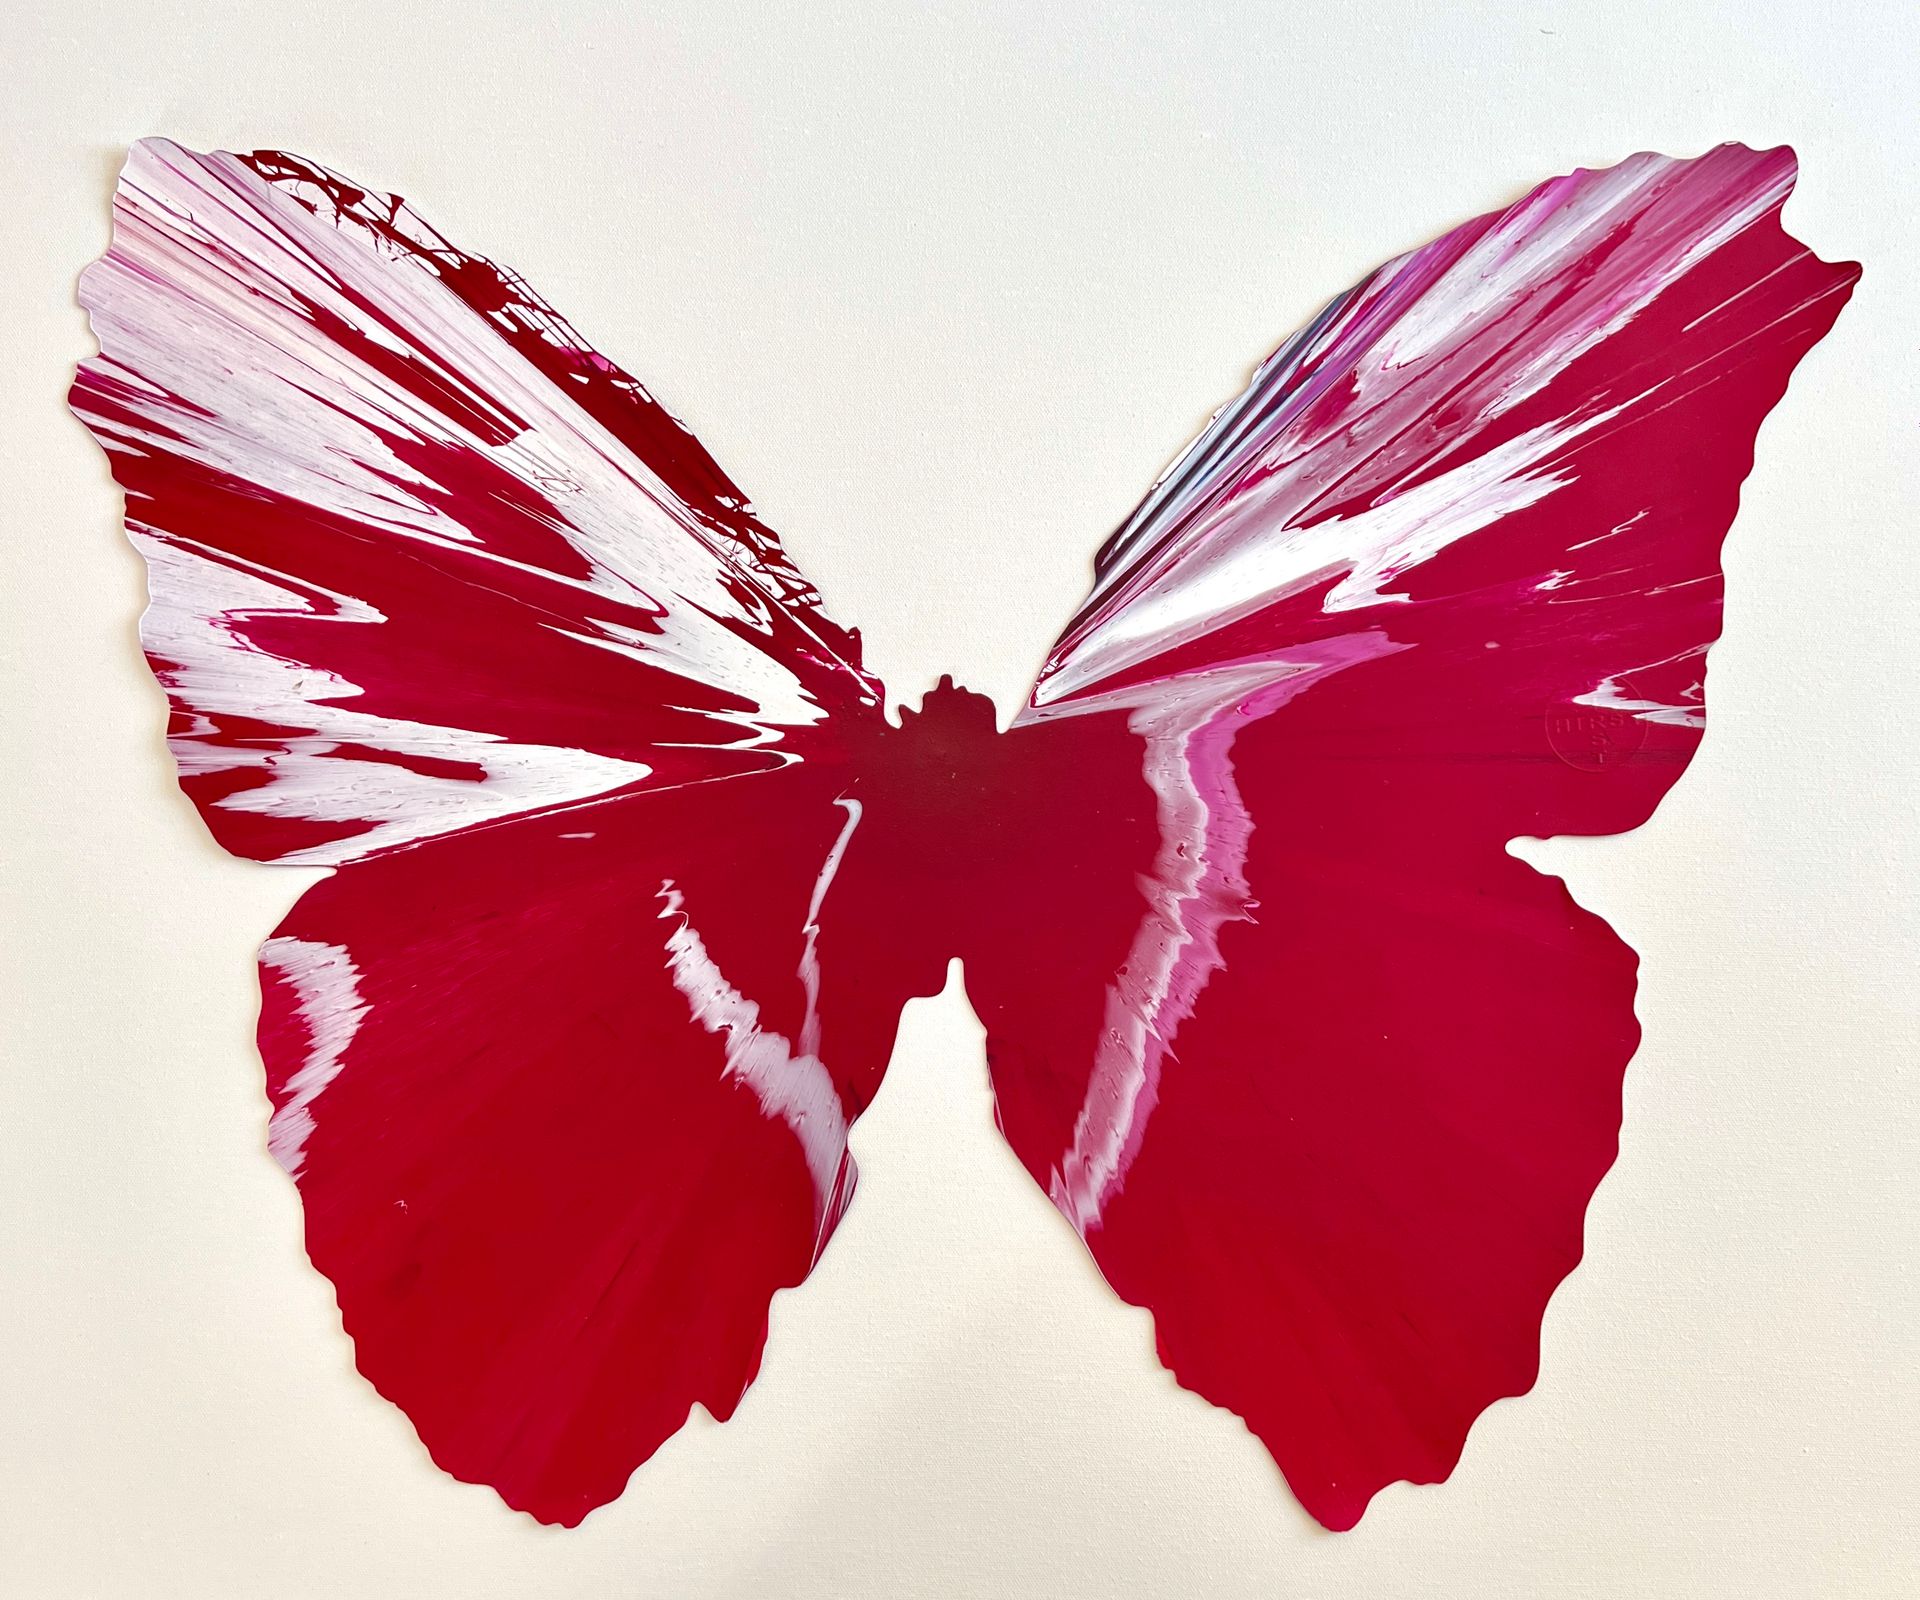 Null 达米安-赫斯特，2009年。蝴蝶。旋转绘画，丙烯酸在纸上。背面有签名章 "赫斯特"。压印的 "HIRST "印章。尺寸：52 x 68厘米。这幅作品是&hellip;